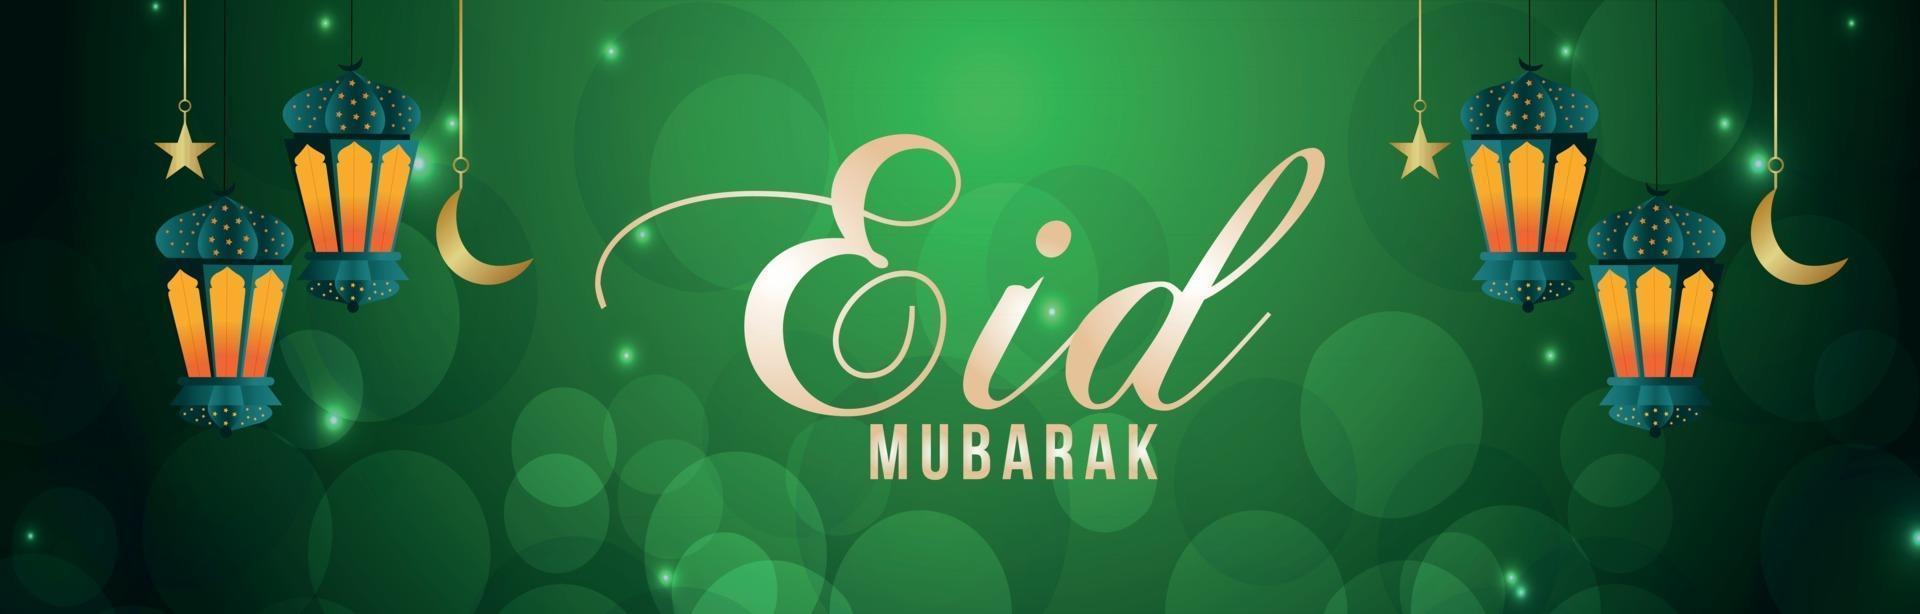 eid mubarak invitation benner avec illustration vectorielle et lanterne arabe vecteur